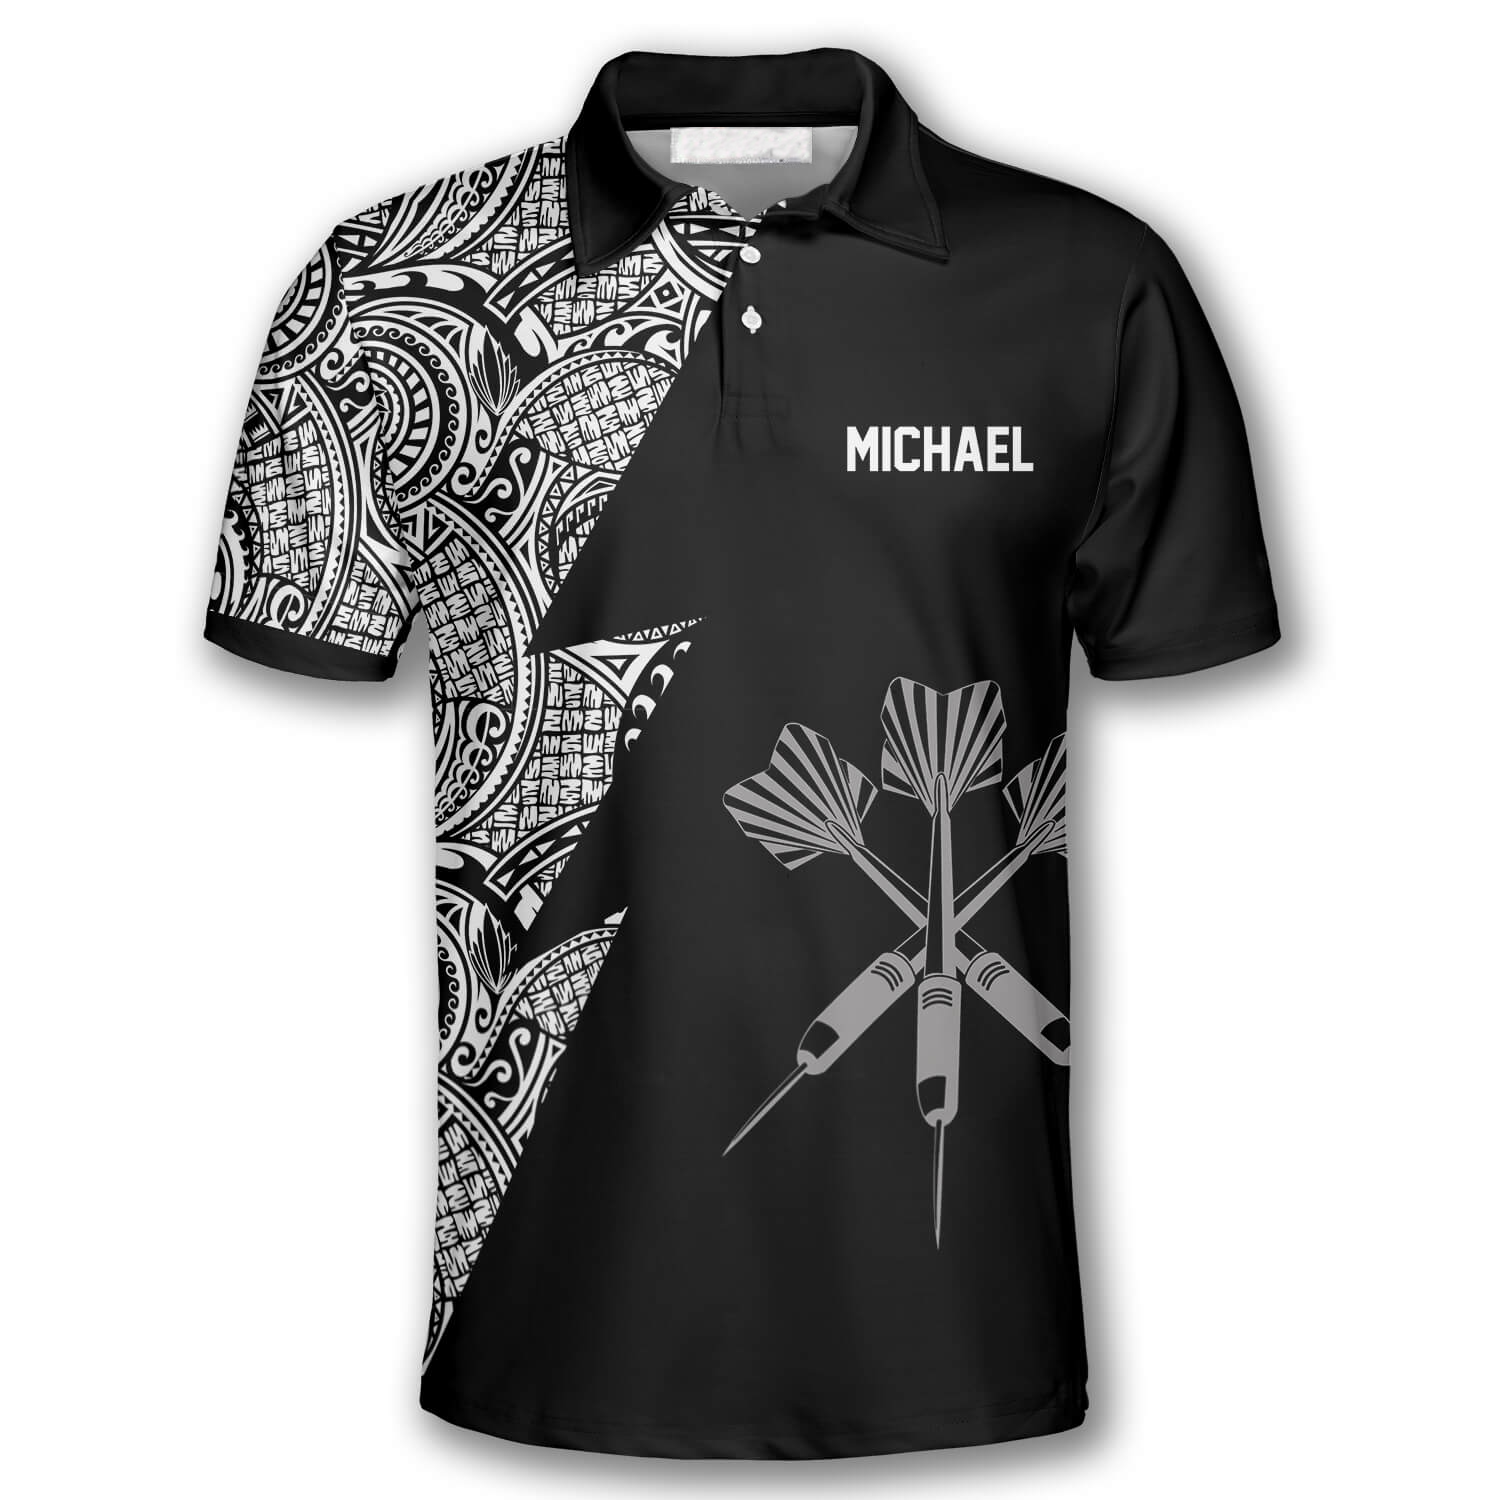 Dart Arrows Tribal Black White Custom Darts Shirts for Men/ Gift for Birthday Dart Player